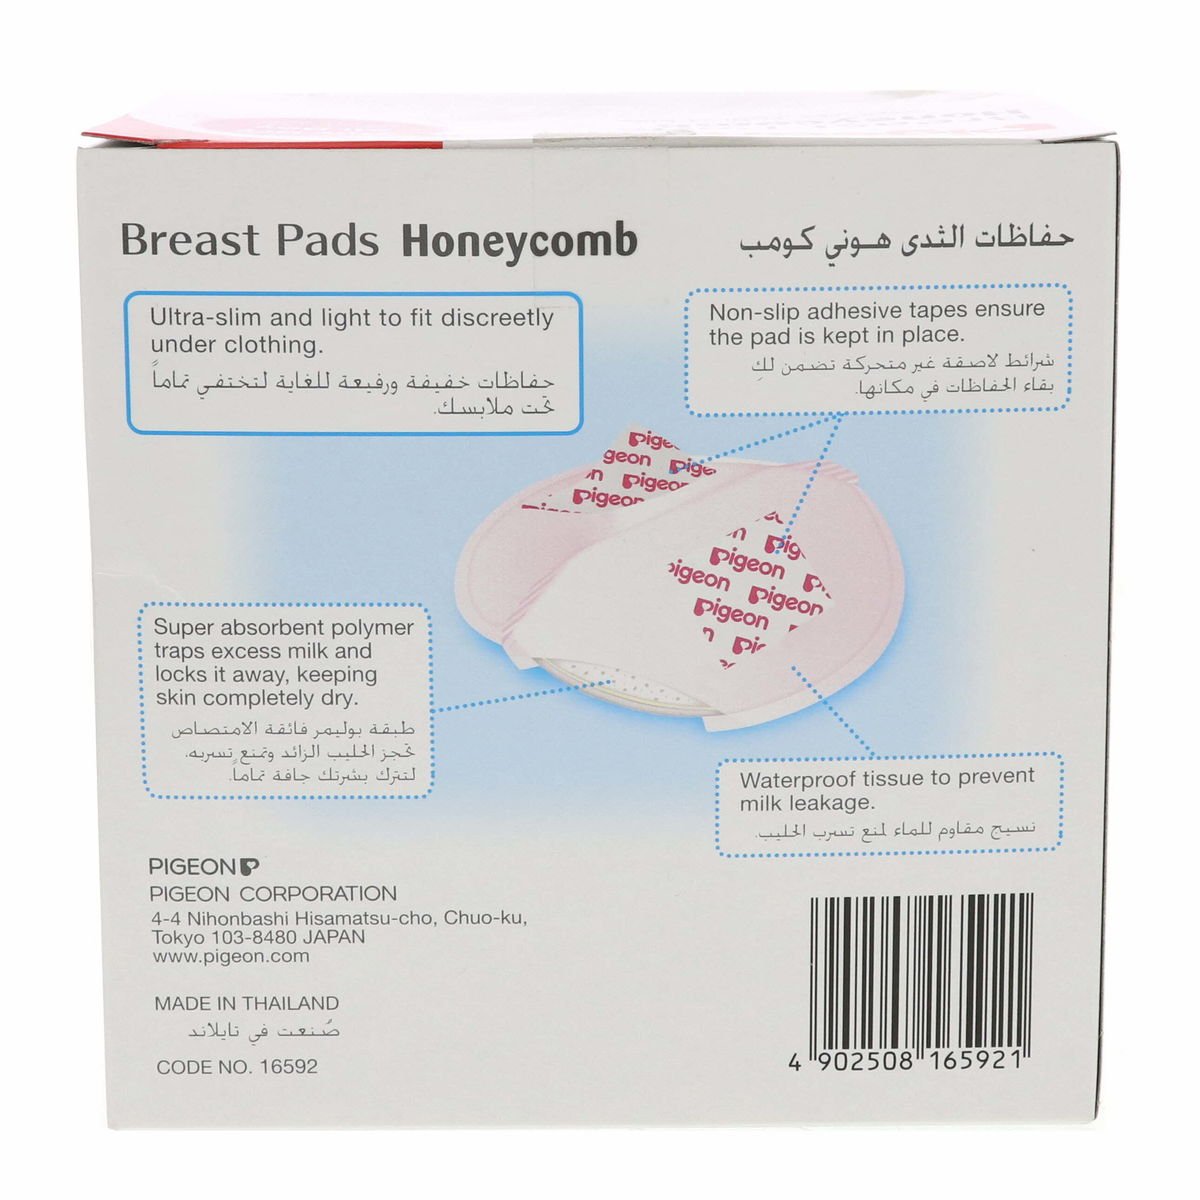 Pigeon Breast Pads Honeycomb 36 pcs